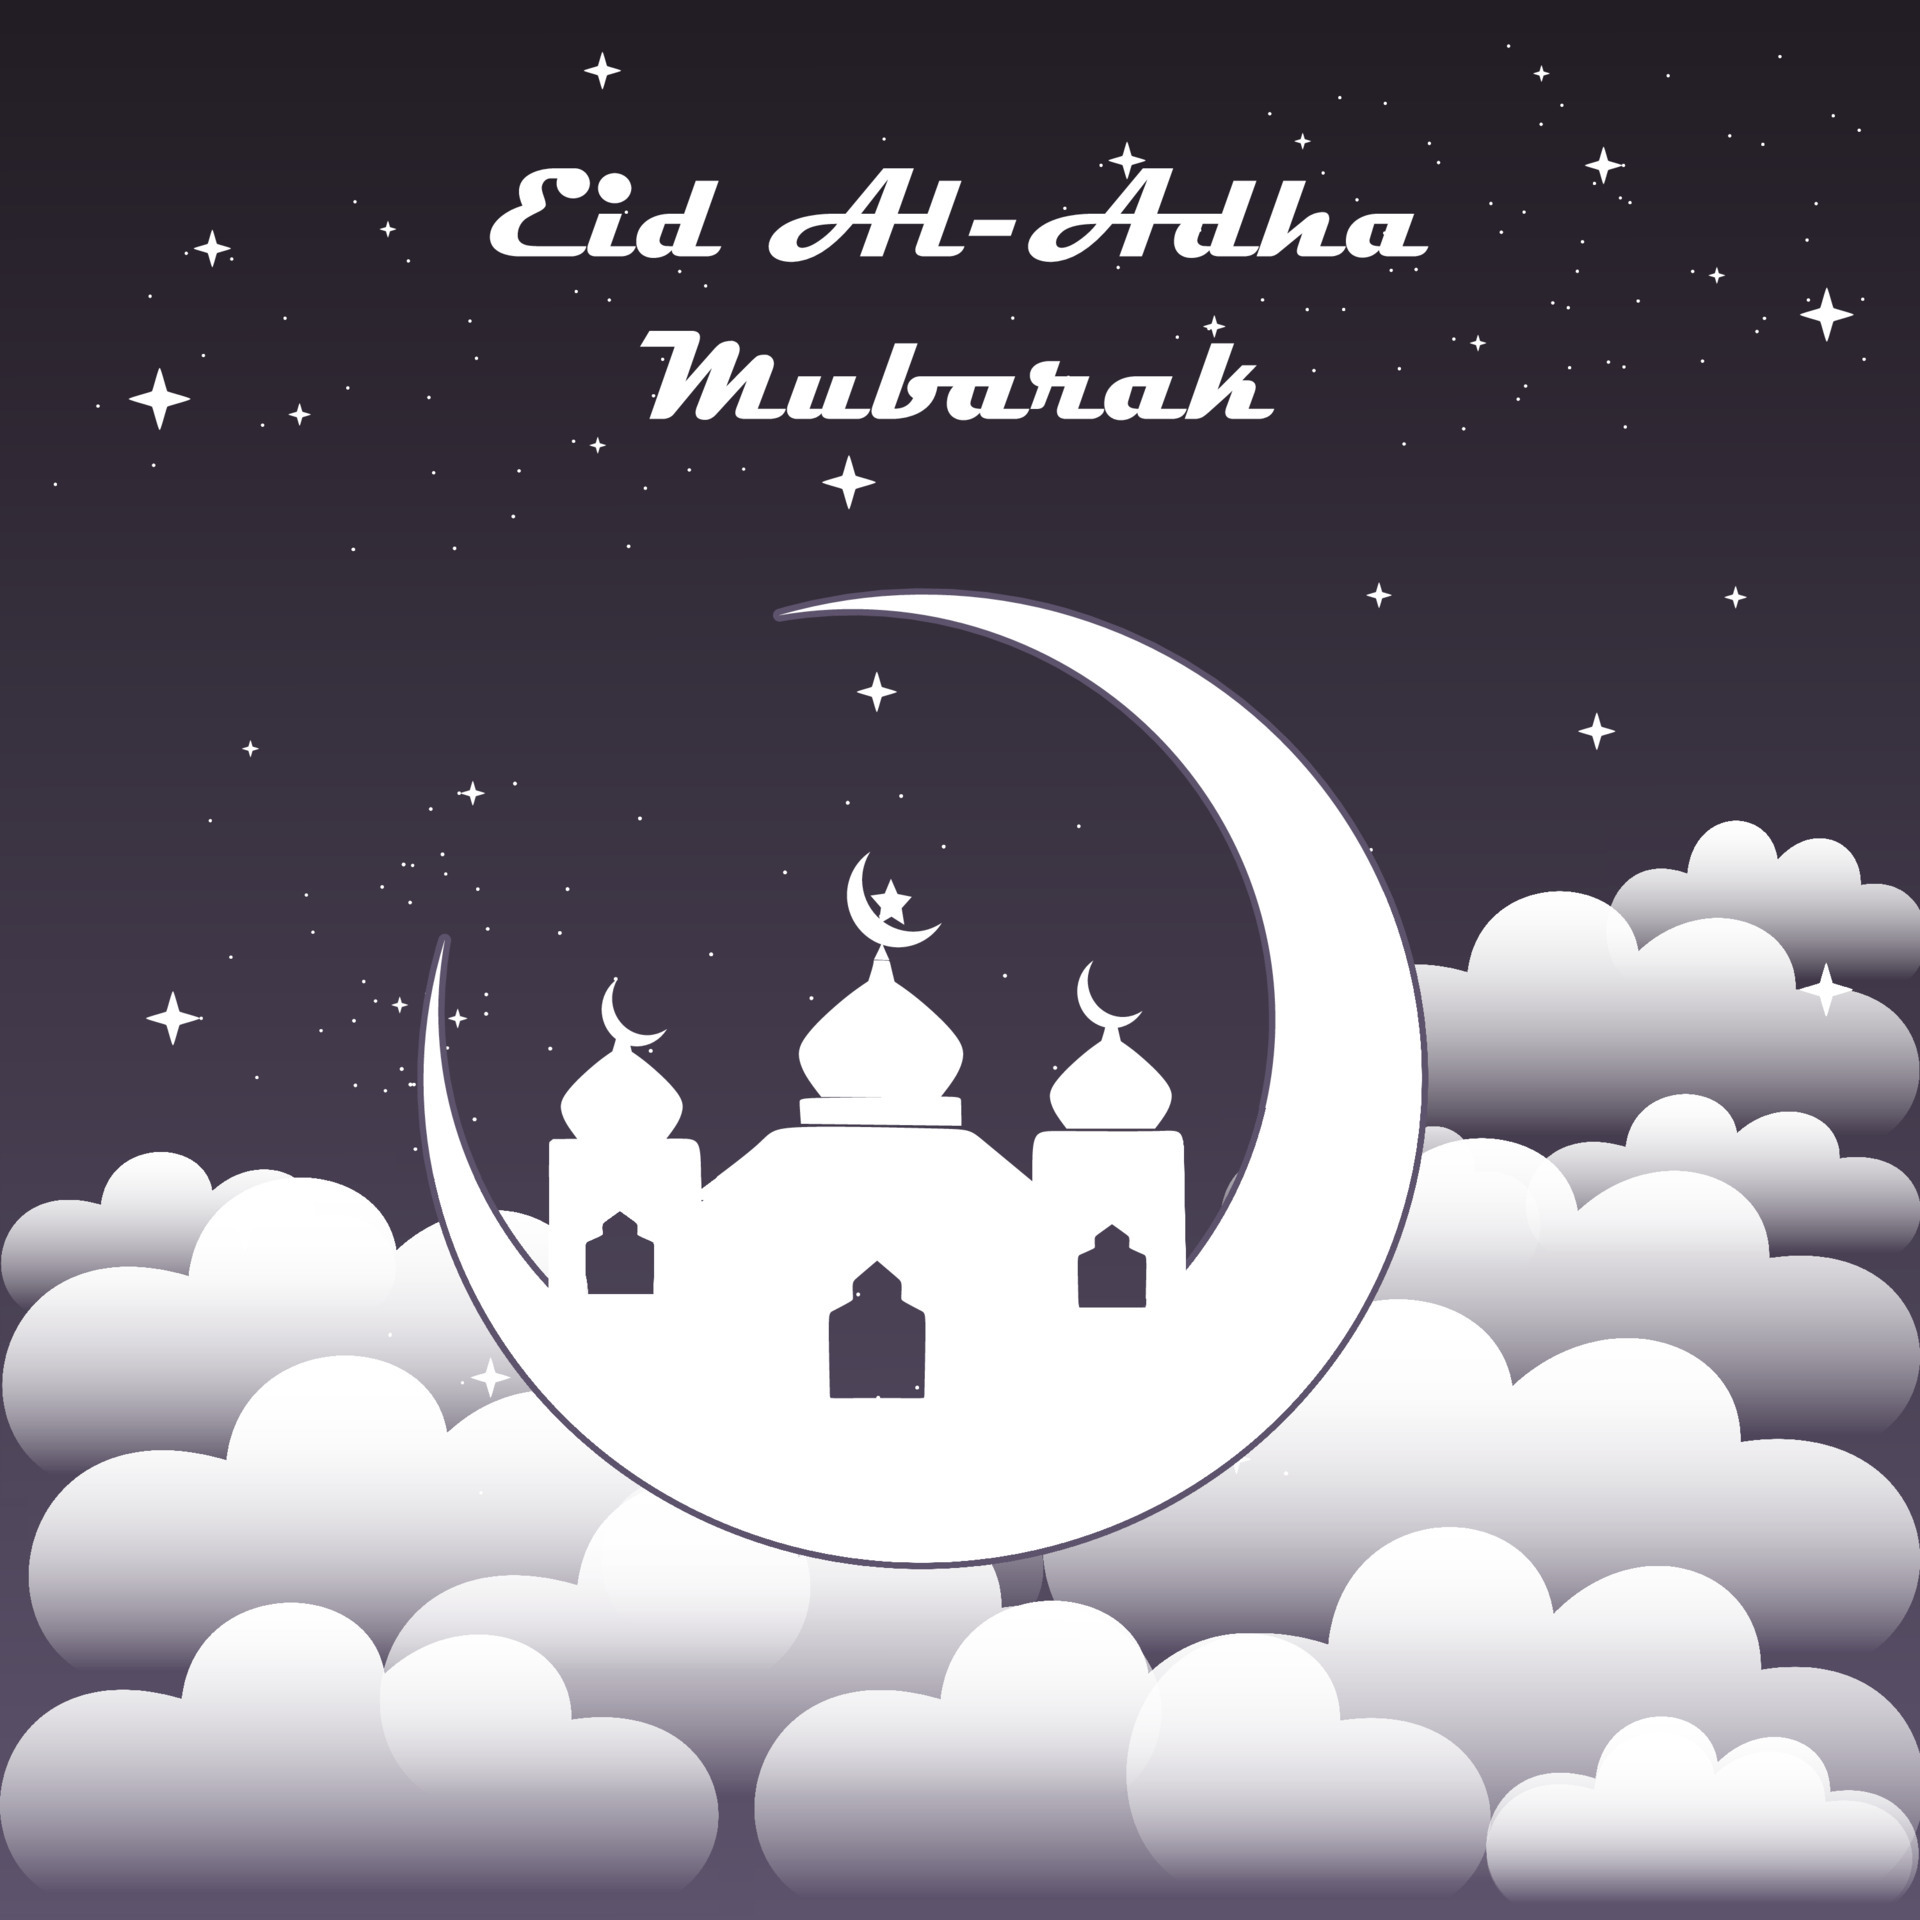 Eid Al Adha Mubarak greeting card vector design. Islamic beautiful  background with mosque, star, moon and text Eid Al-Adha Mubarak. Islamic  illustration for muslim community sacrifice celebration. 4756382 Vector Art  at Vecteezy